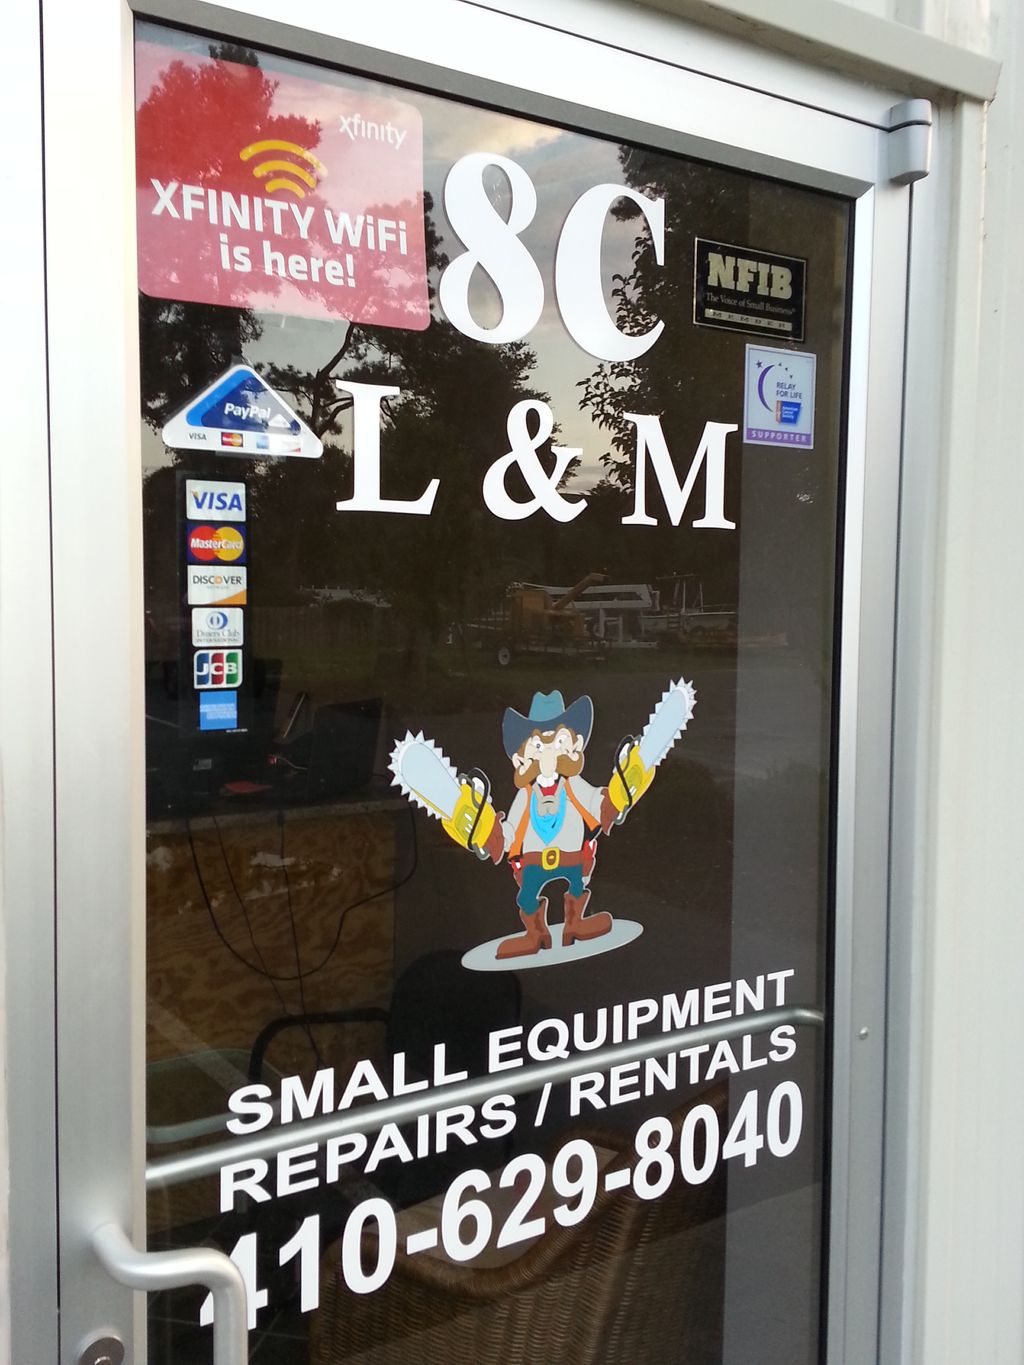 L&M Small Equipment Rentals & Repairs